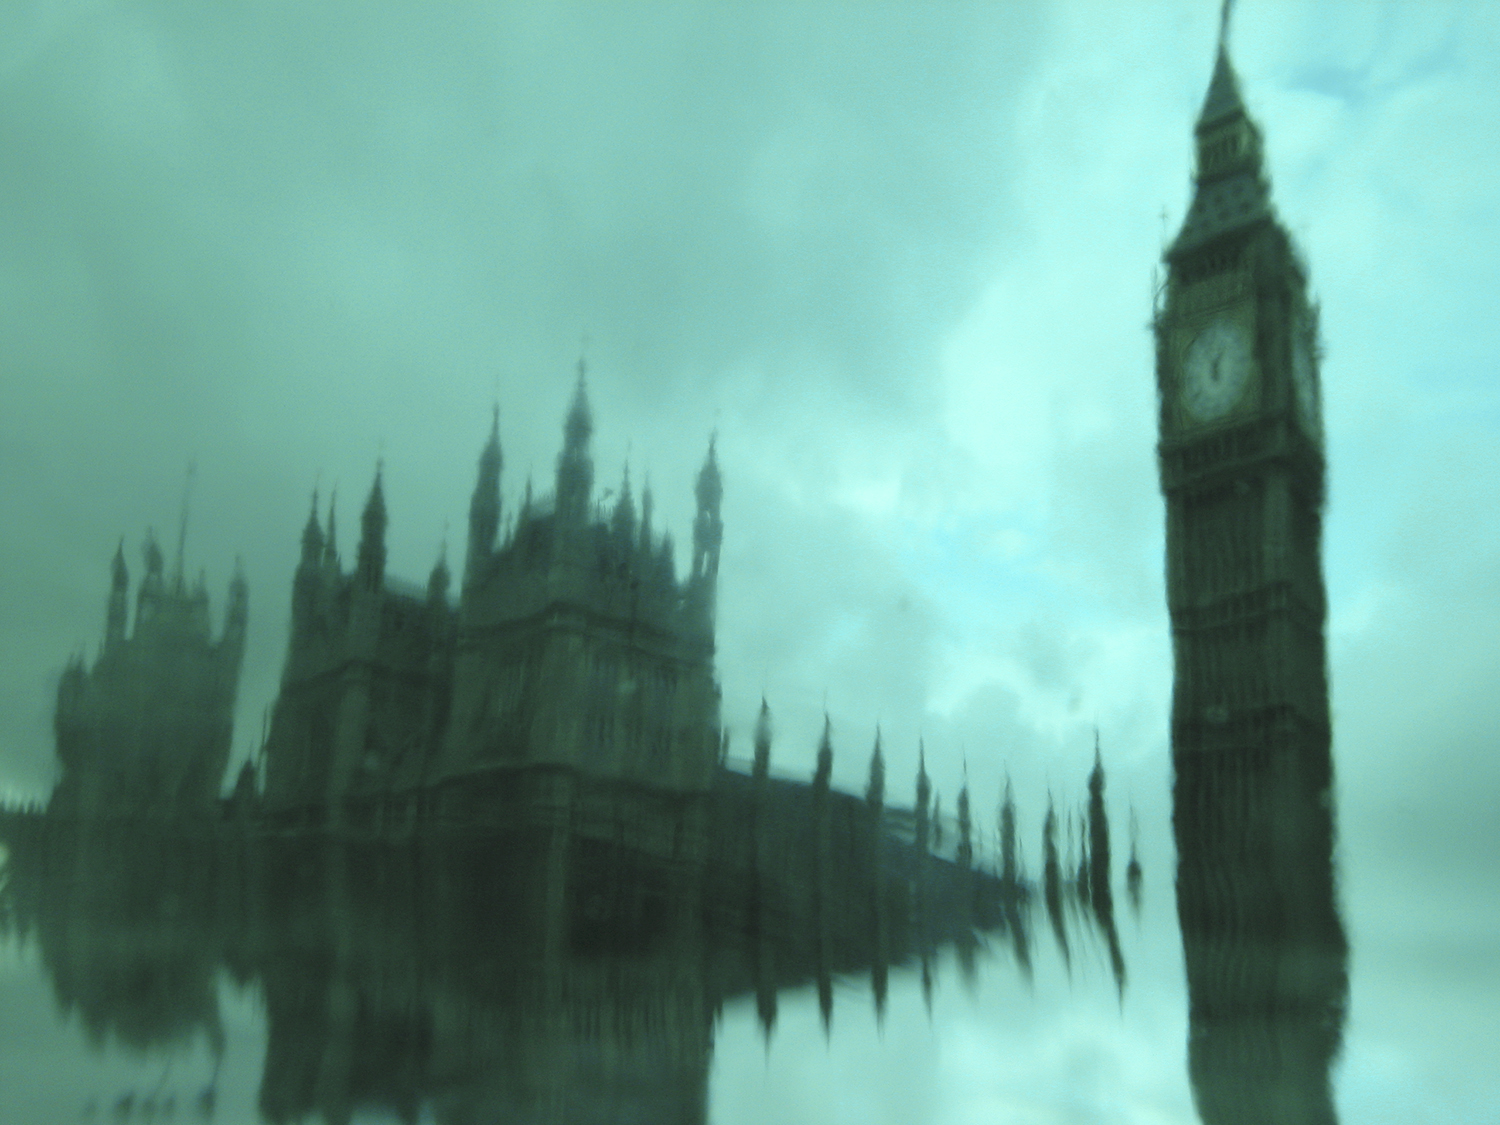 Big Ben & Parliment - London, UK